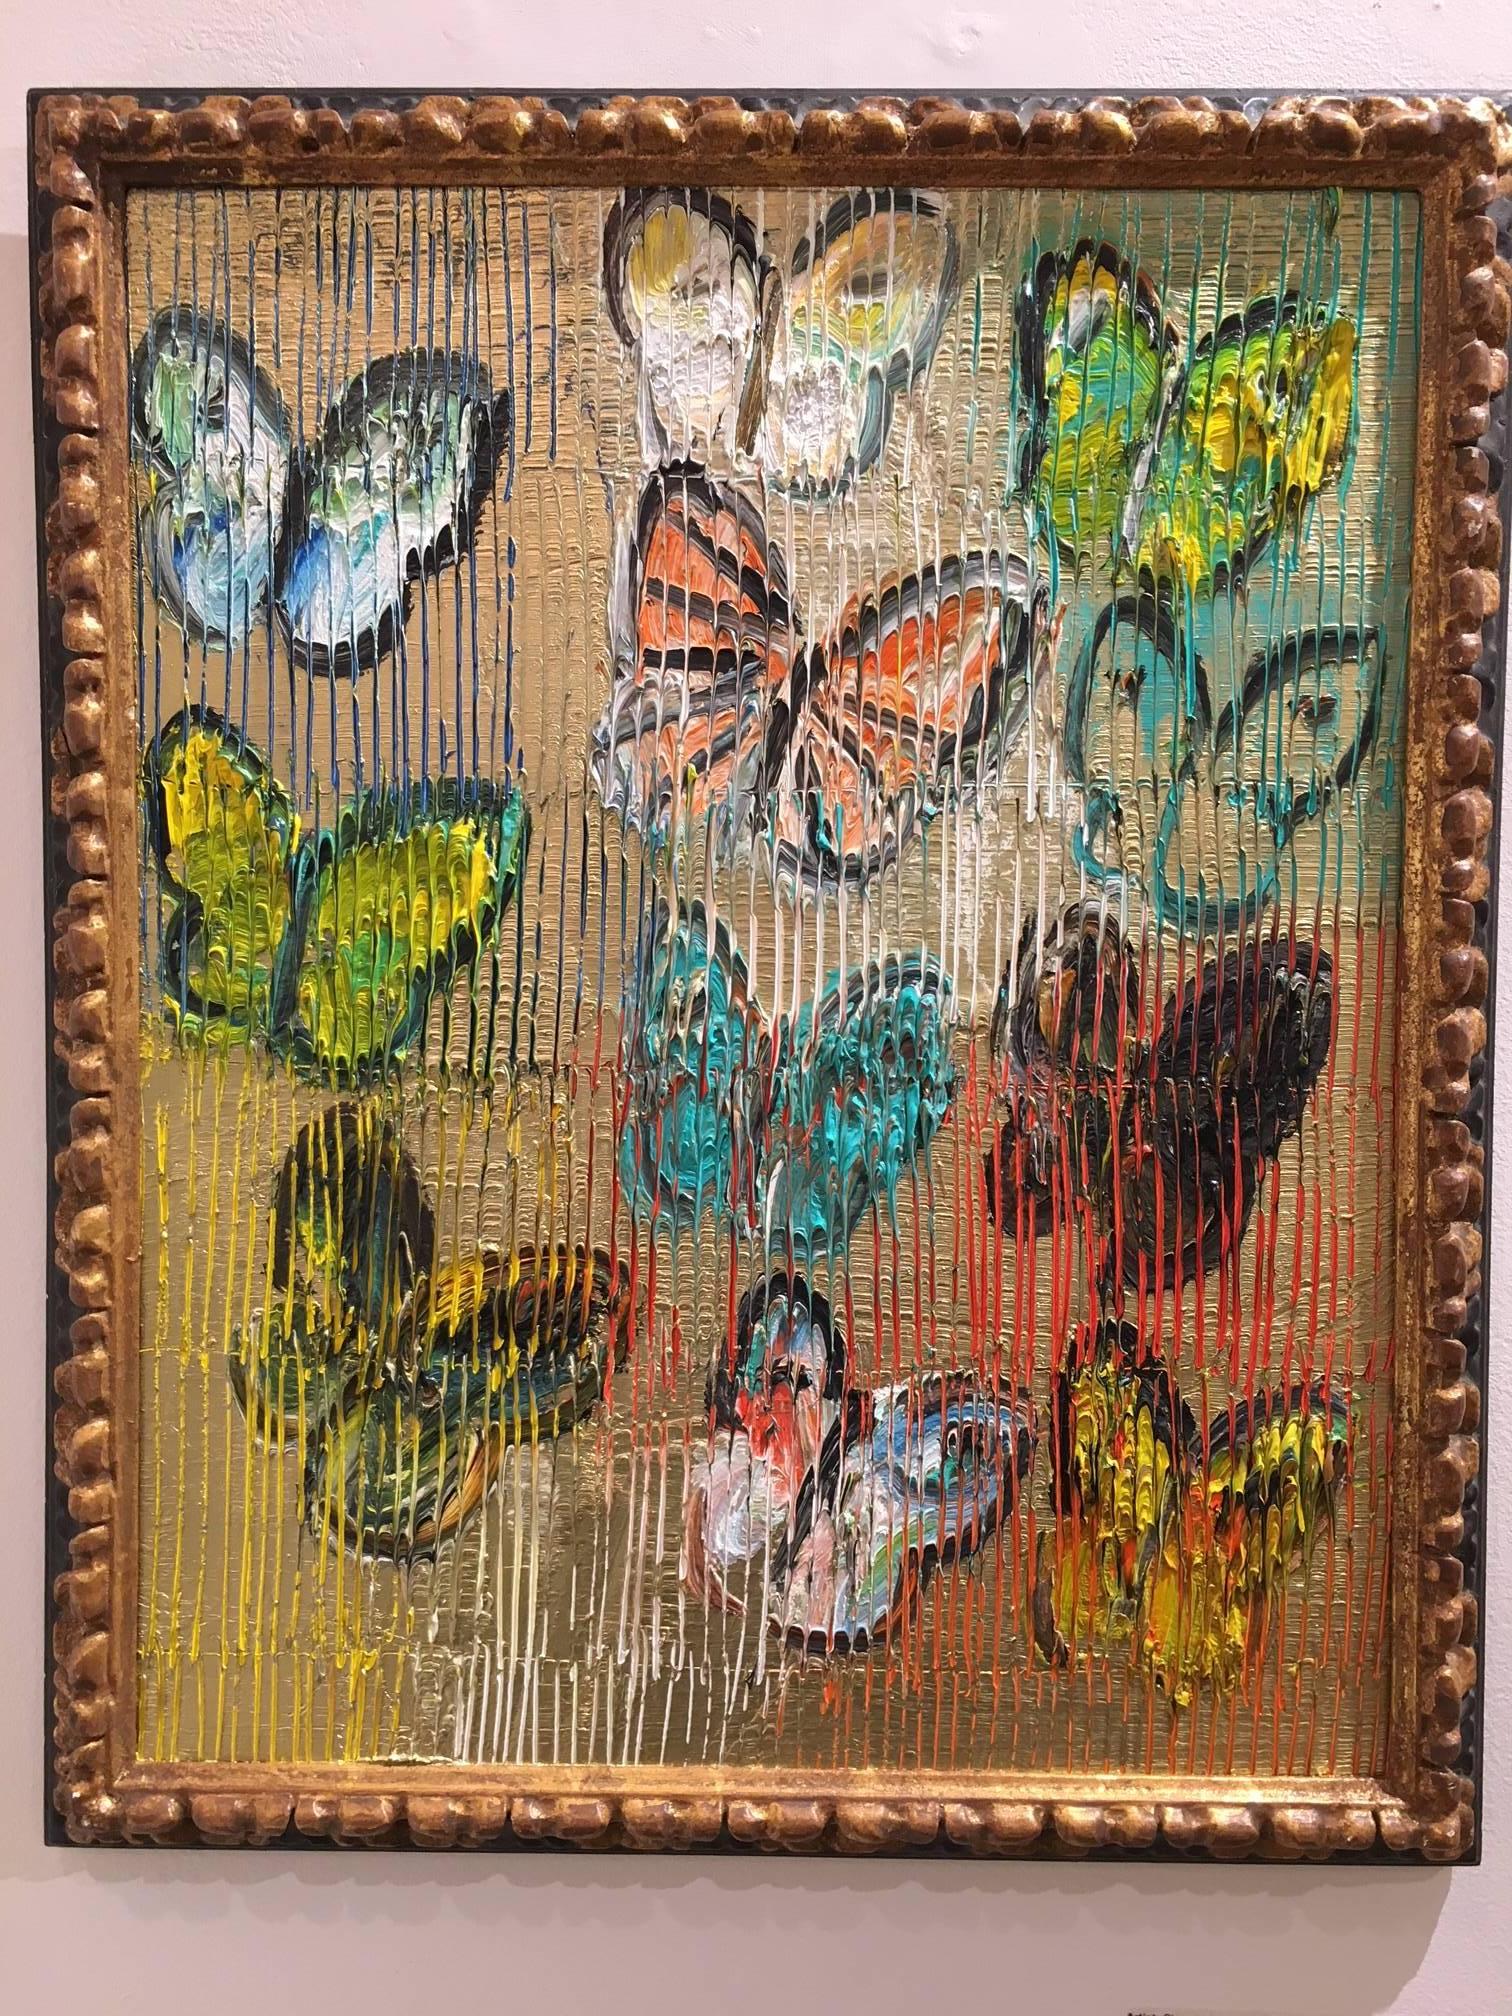 Artist:  Slonem, Hunt
Title:  Day Moth
Series:  Butterflies
Date:  2017
Medium:  Oil on panel
Unframed Dimensions:  19" x 15"
Framed Dimensions:  20.5" x 17"
Signature:  Signed
Edition:  Unique